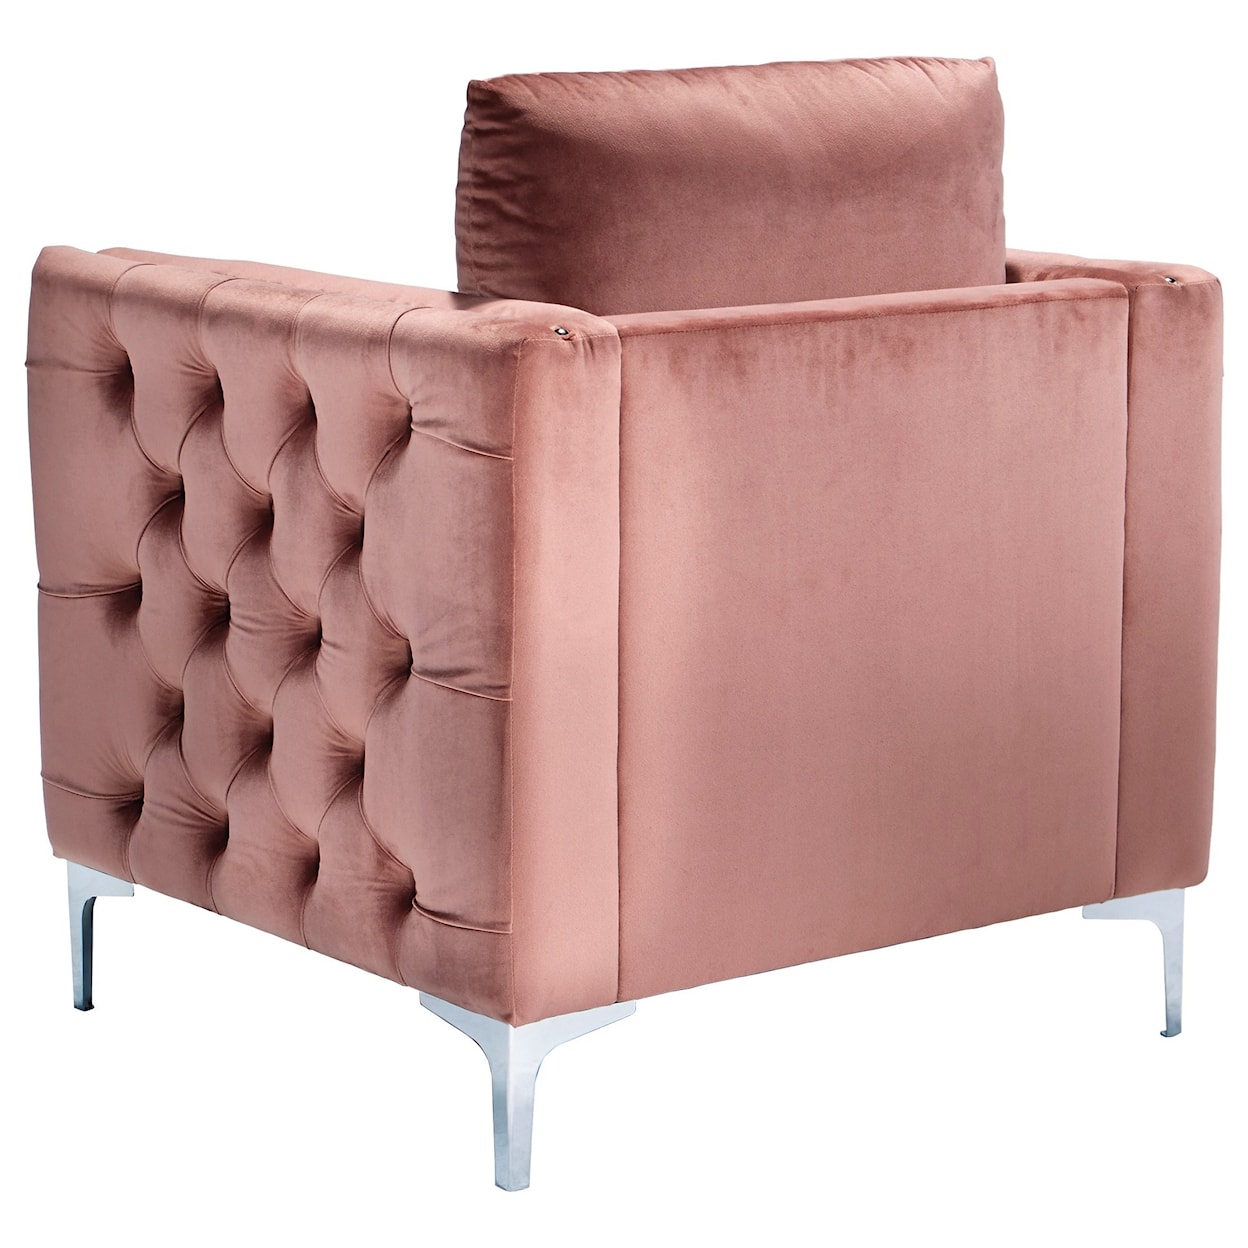 Ashley Furniture Signature Design Lizmont Accent Chair